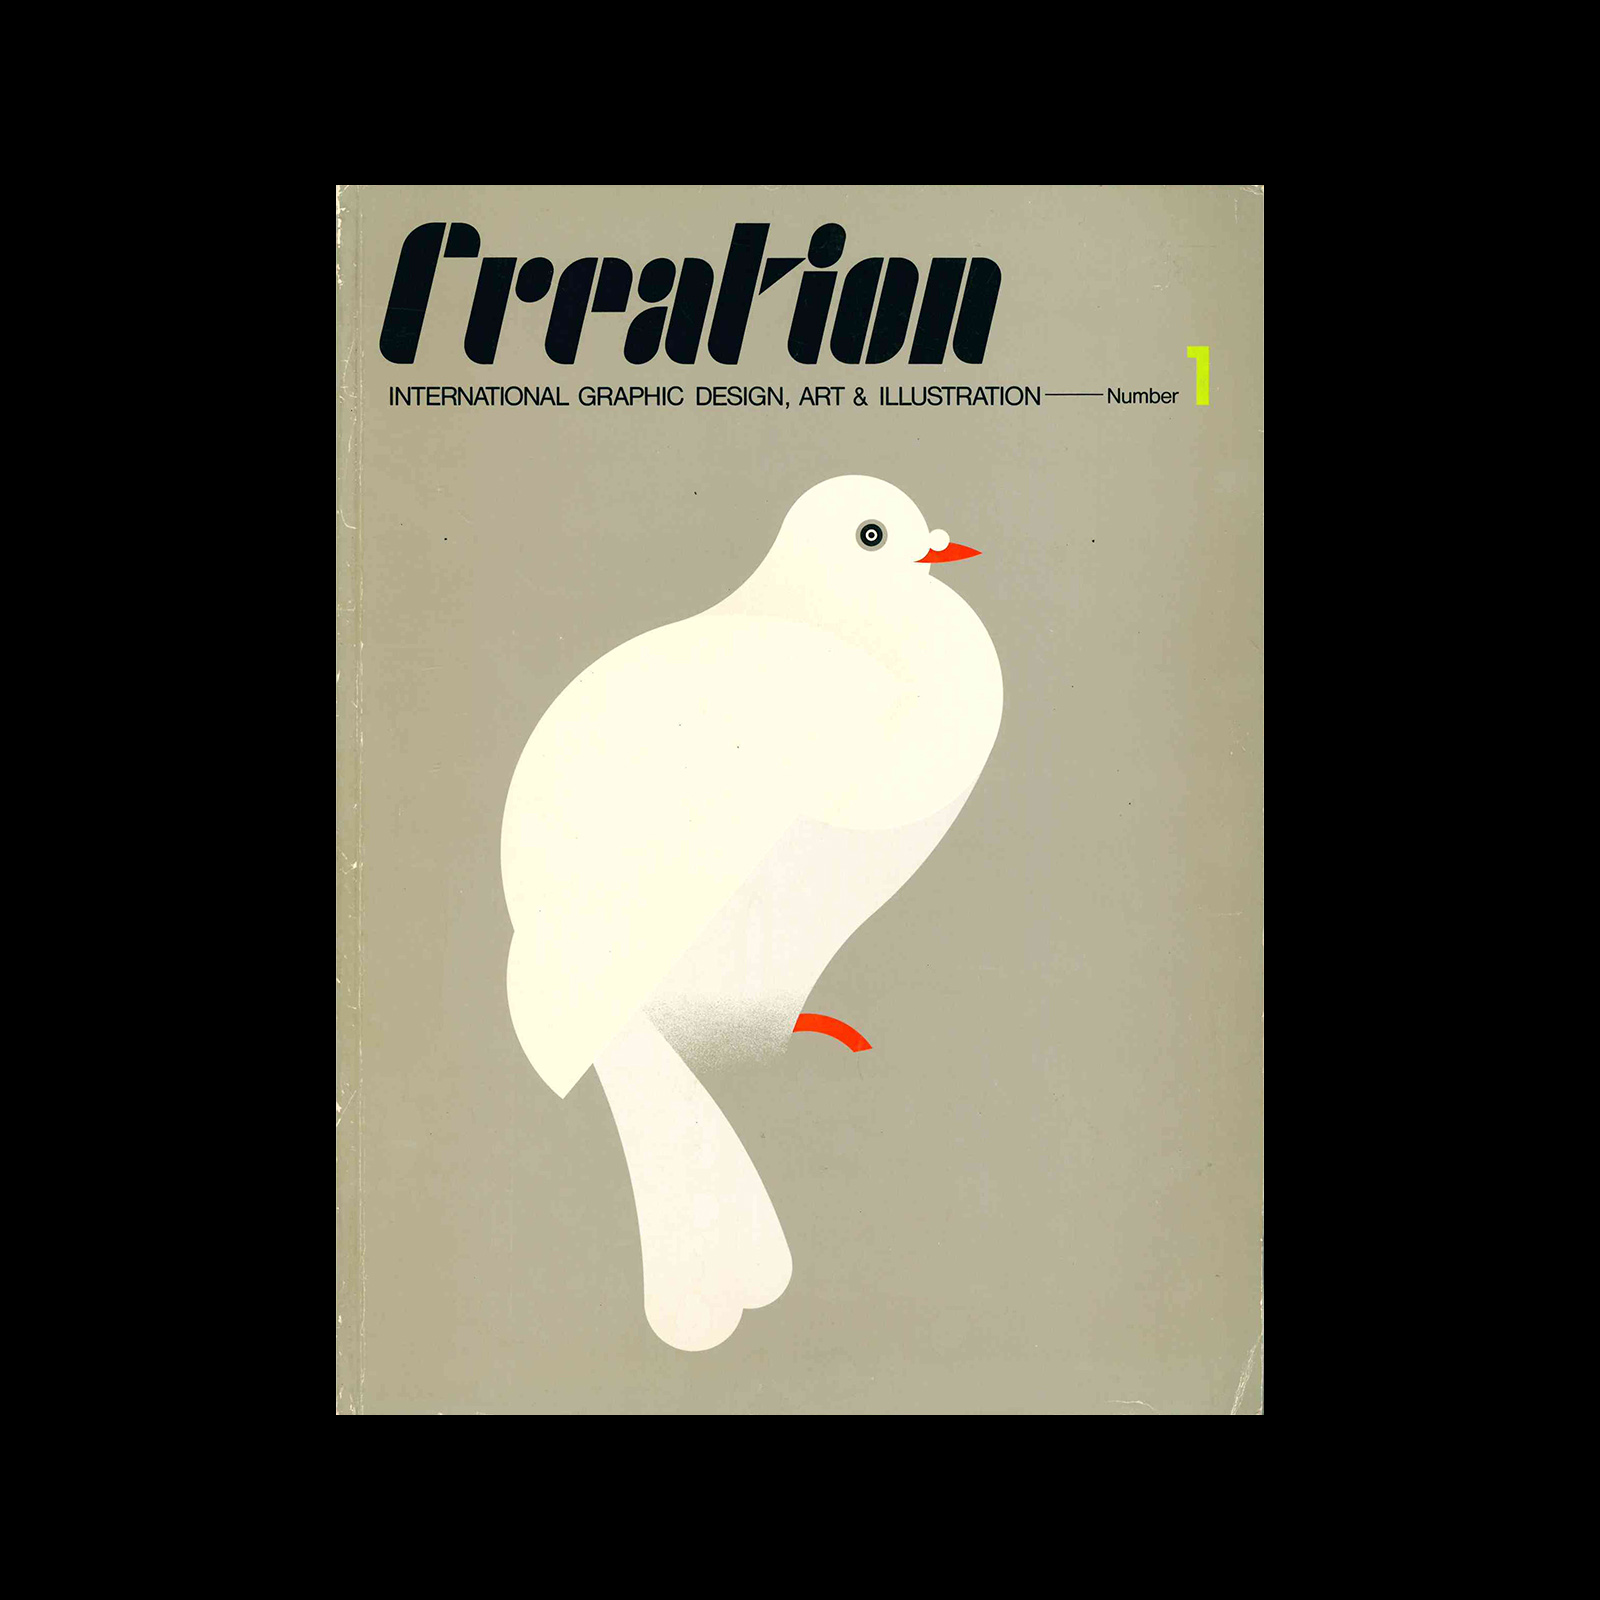 CREATION no. 1 (International Graphic Design, Art and Illustration 